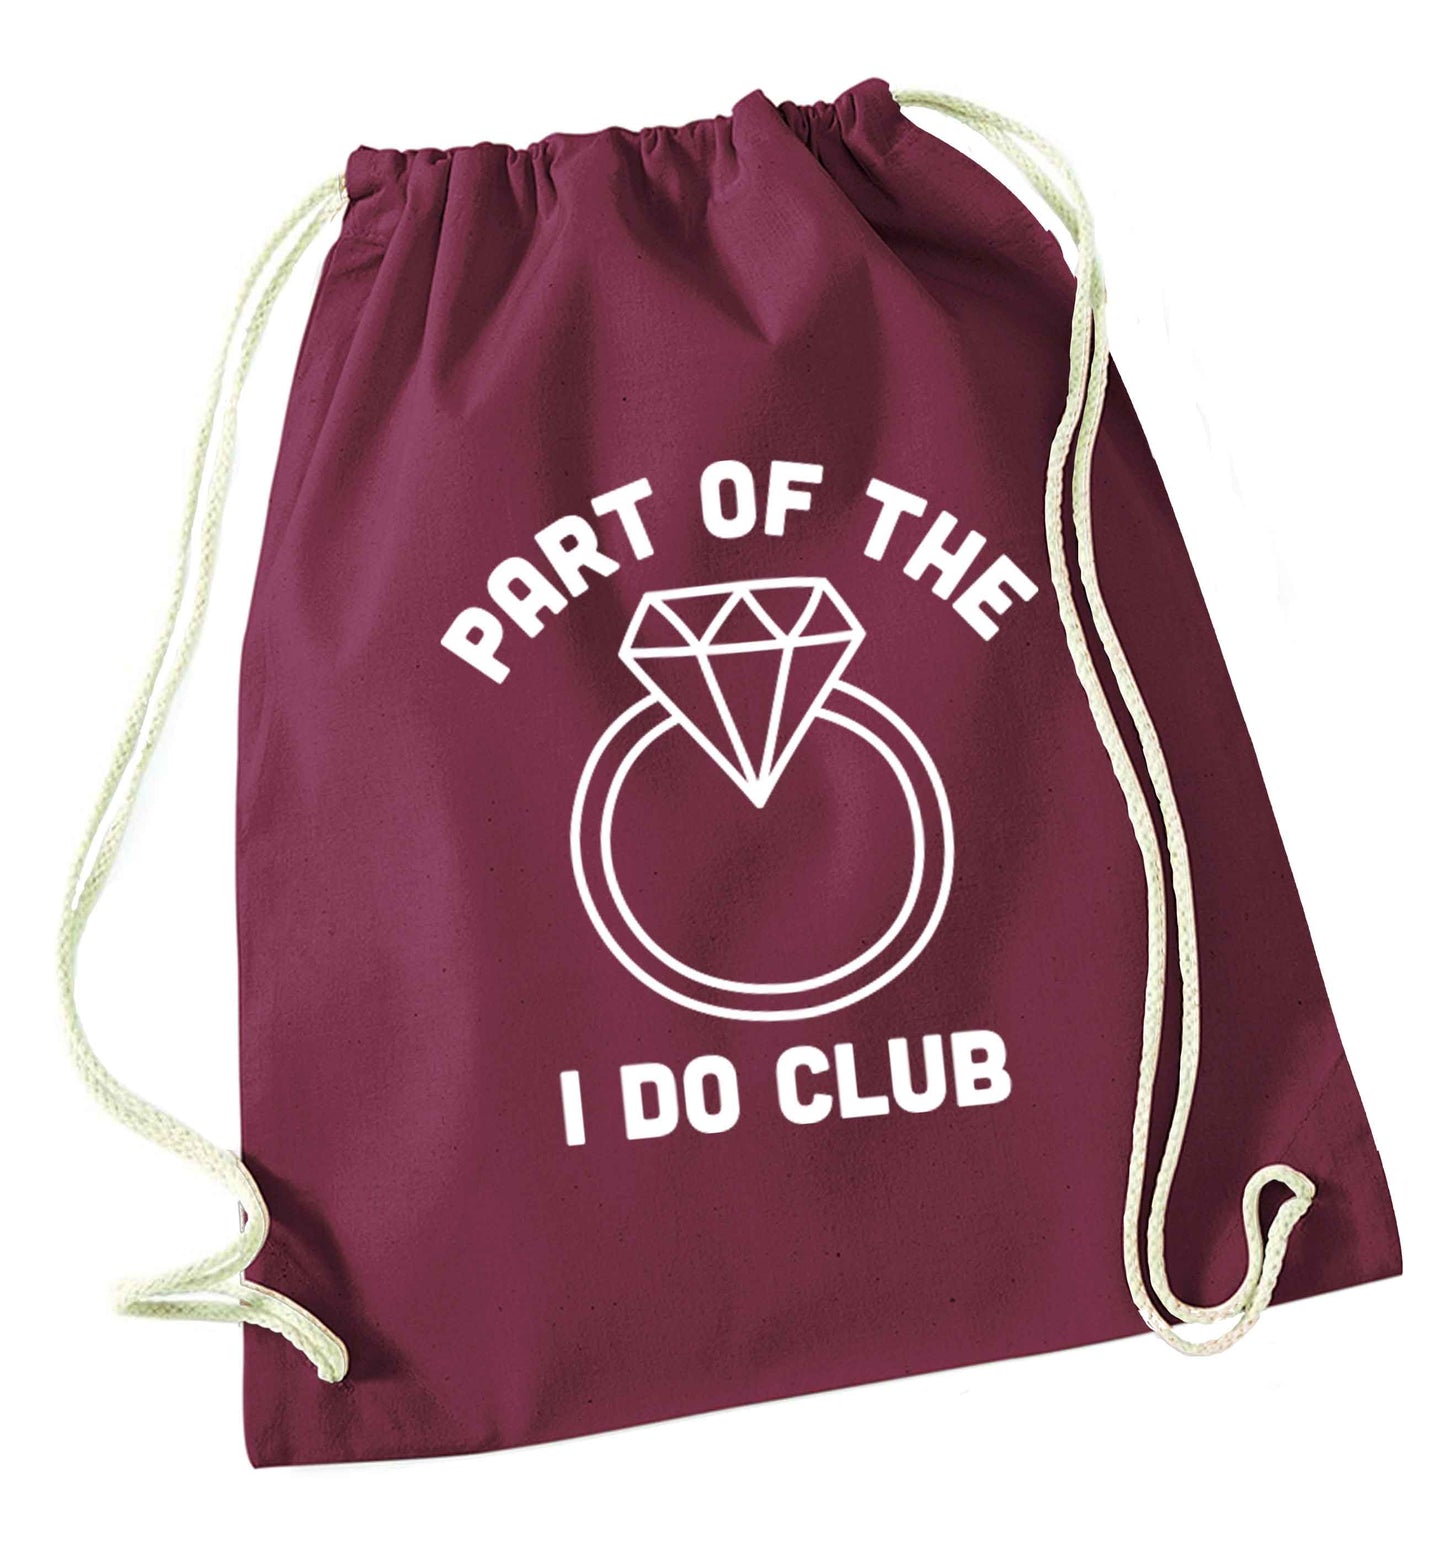 Part of the I do club maroon drawstring bag